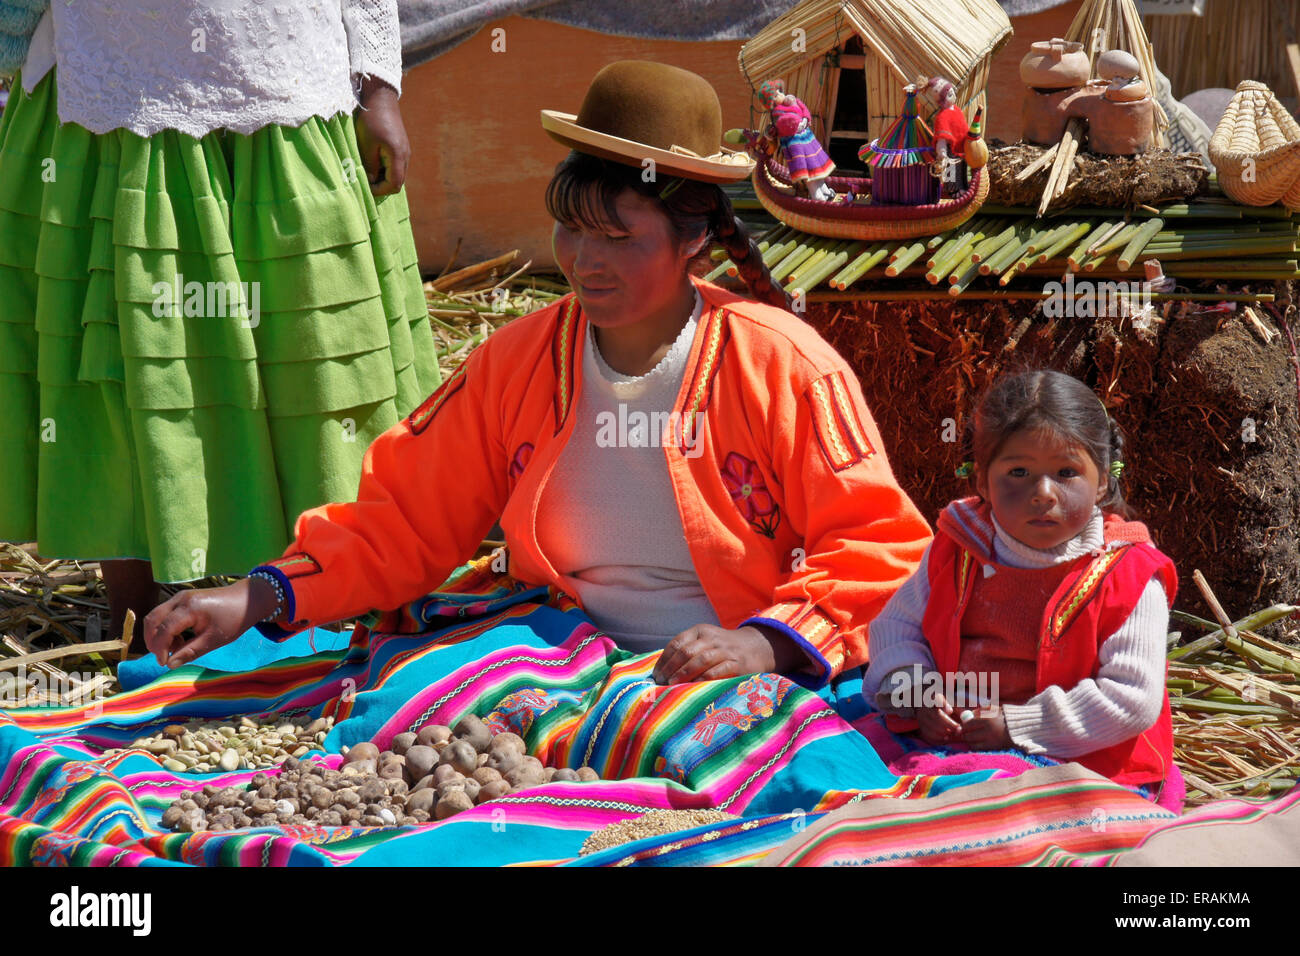 Uros Indian woman and child with potatoes, Titino floating island (Puno), Lake Titicaca, Peru Stock Photo